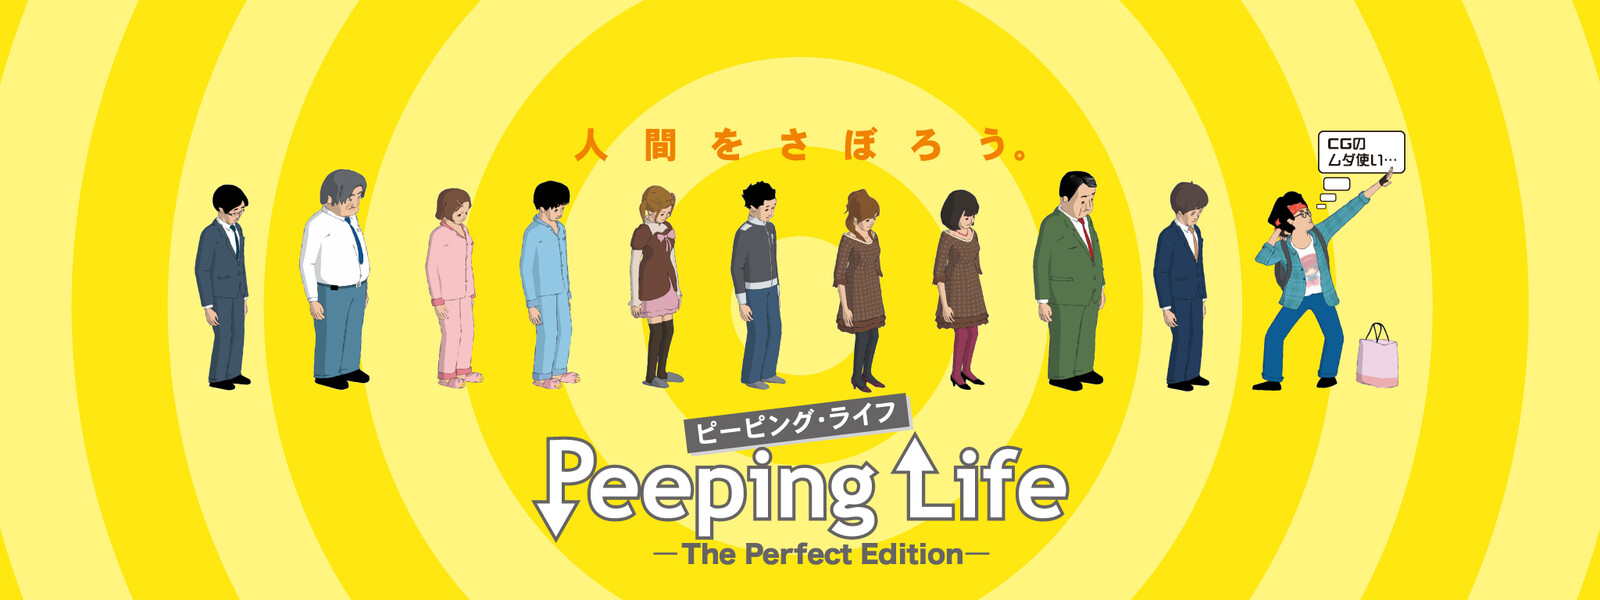 Peeping Life (ピーピング･ライフ) -The Perfect Edition- イエロー盤の動画 - Peeping Life (ピーピング･ライフ)×怪獣酒場 かいじゅうたちがいるところ